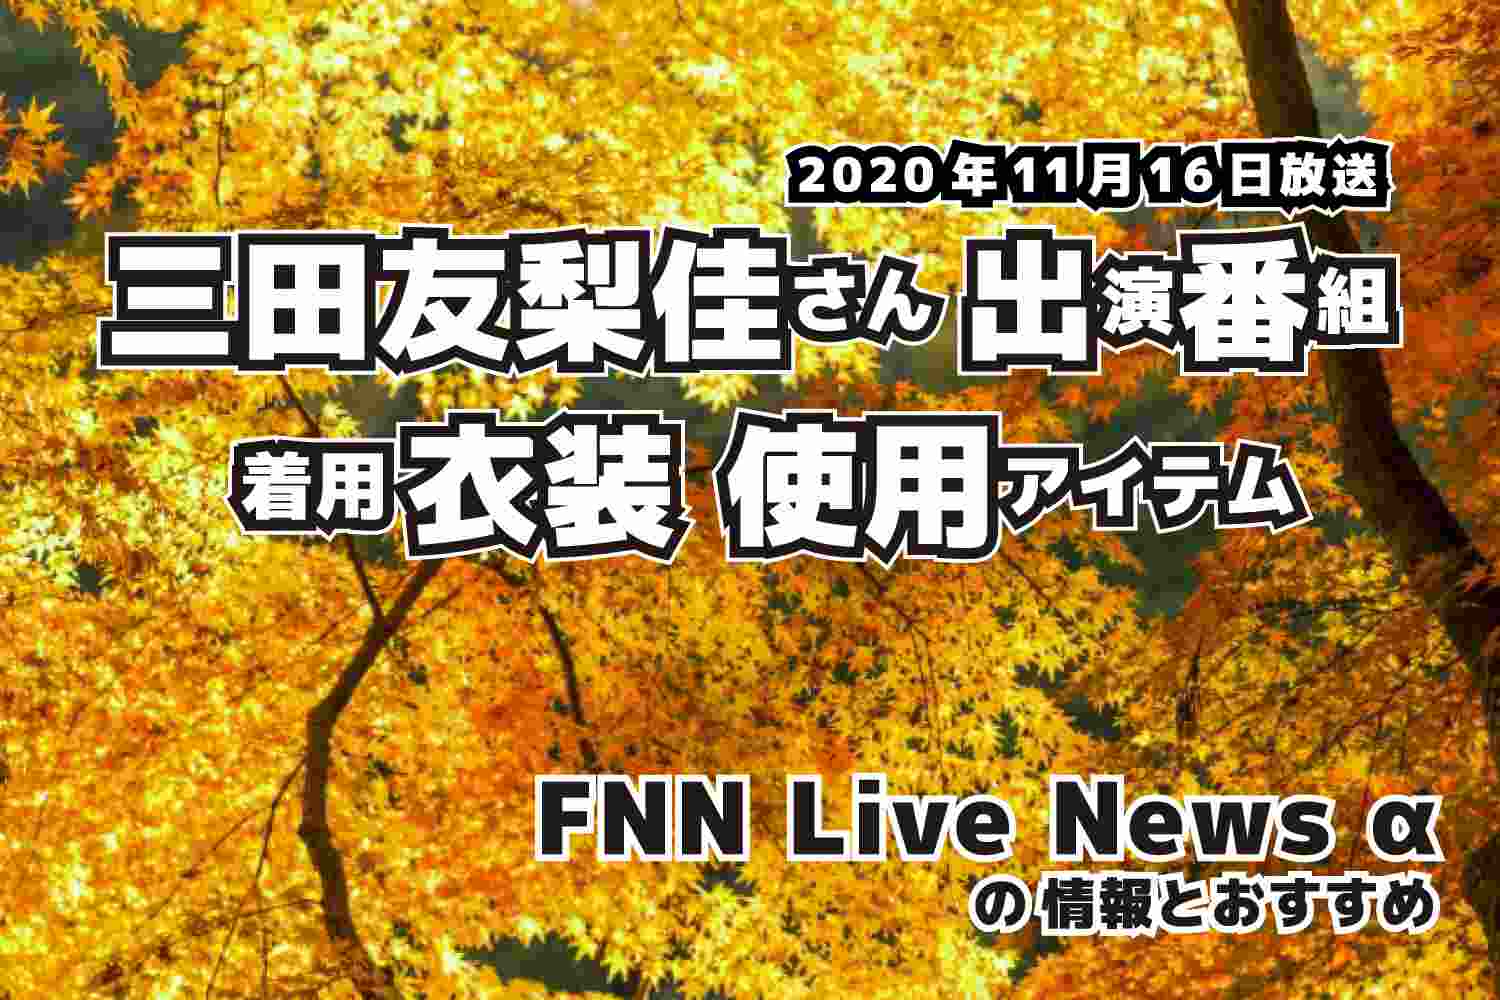 FNN Live News α　三田友梨佳さん 　衣装　2020年11月16日放送